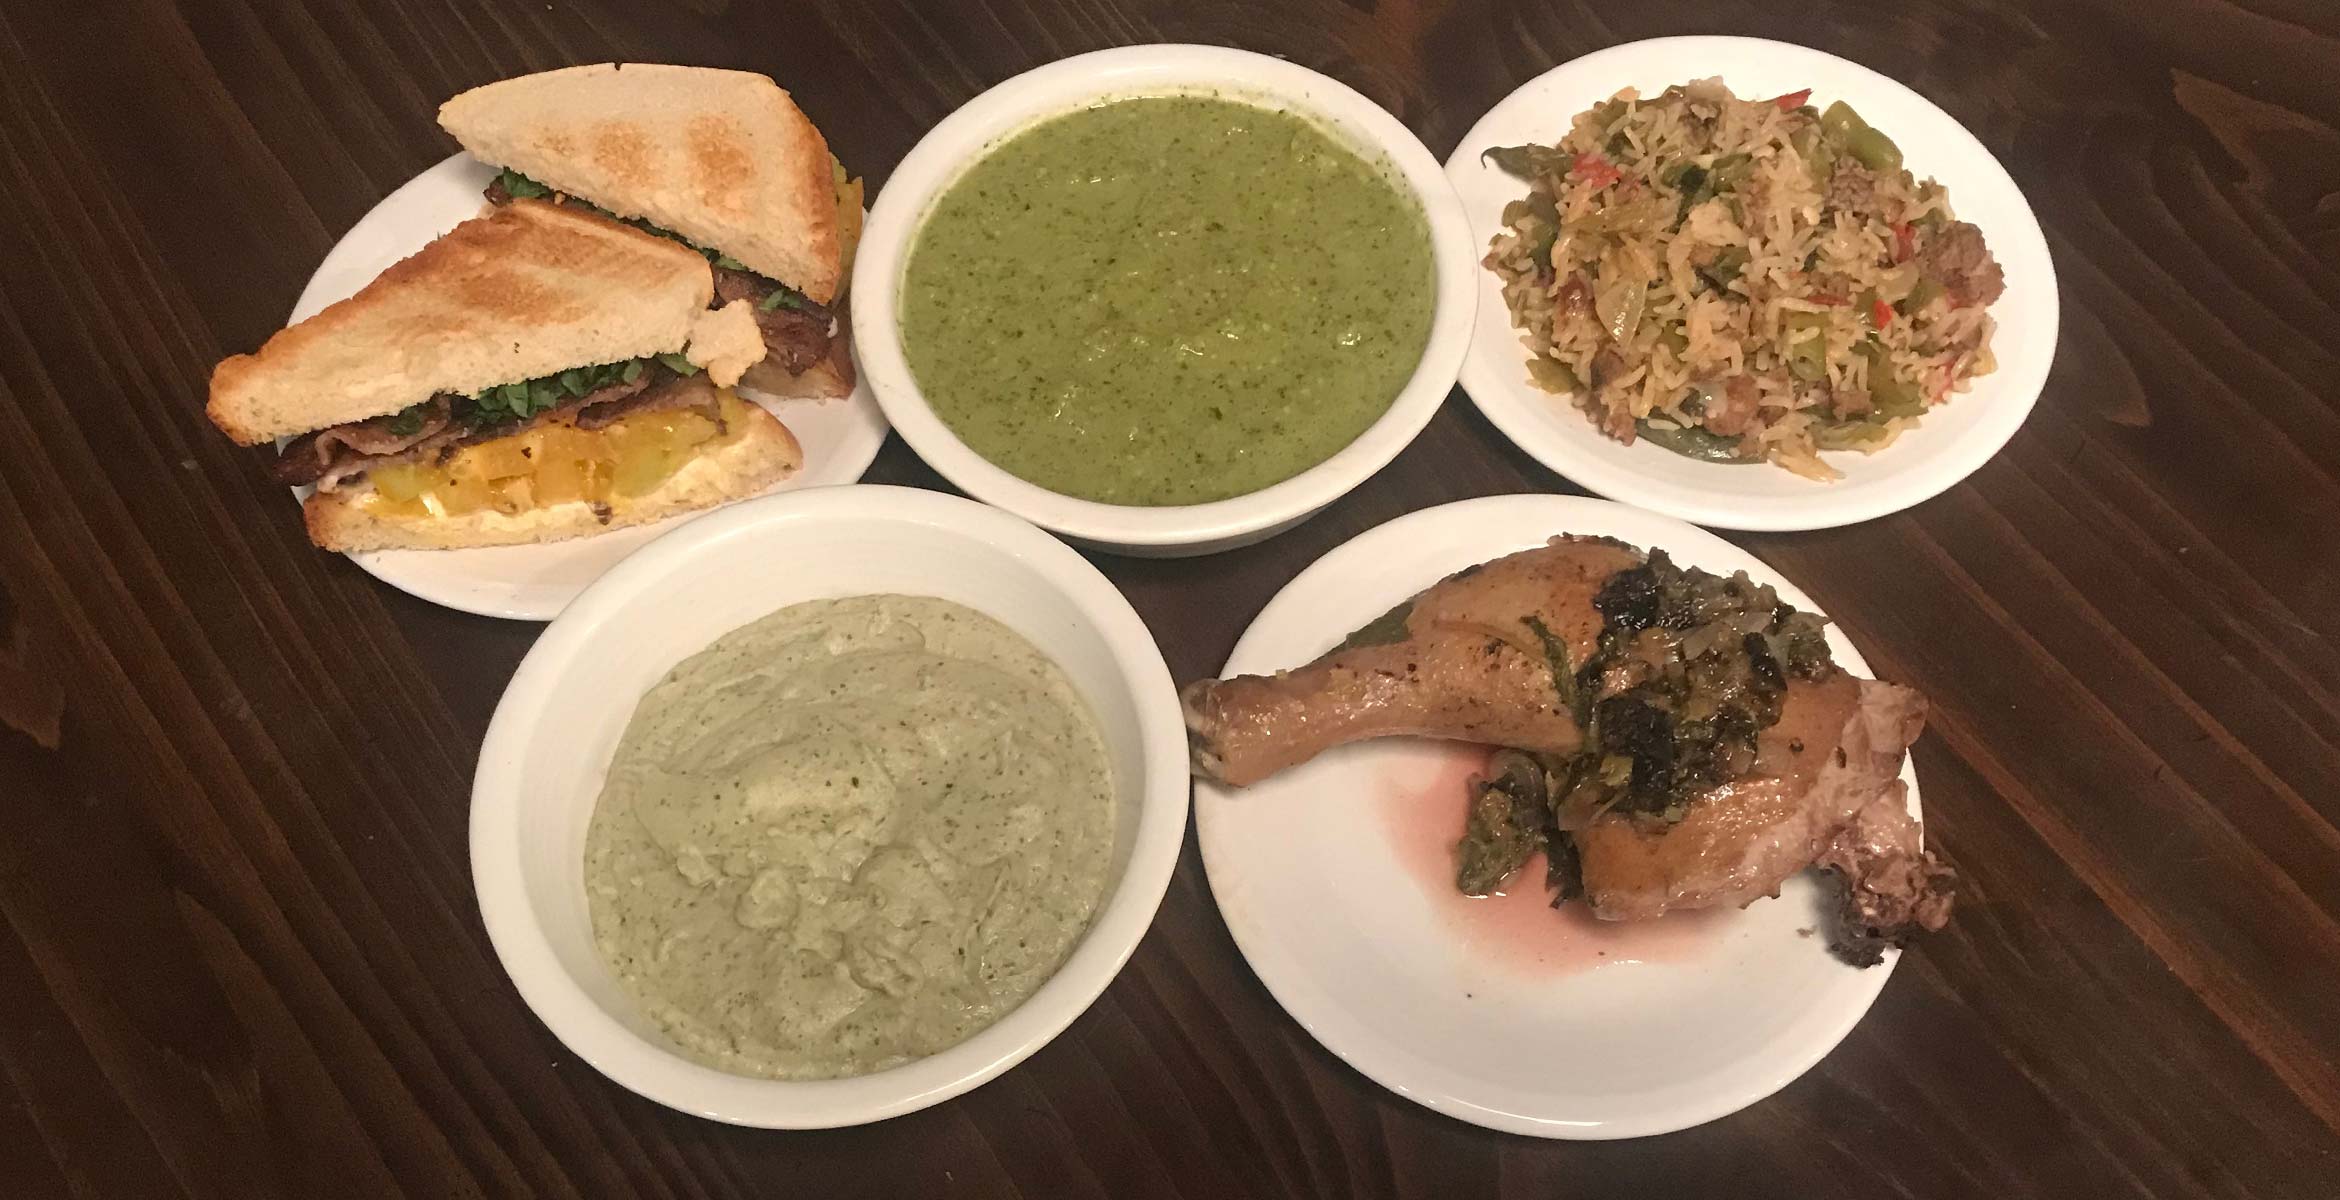 2019-csa-week-15-meals